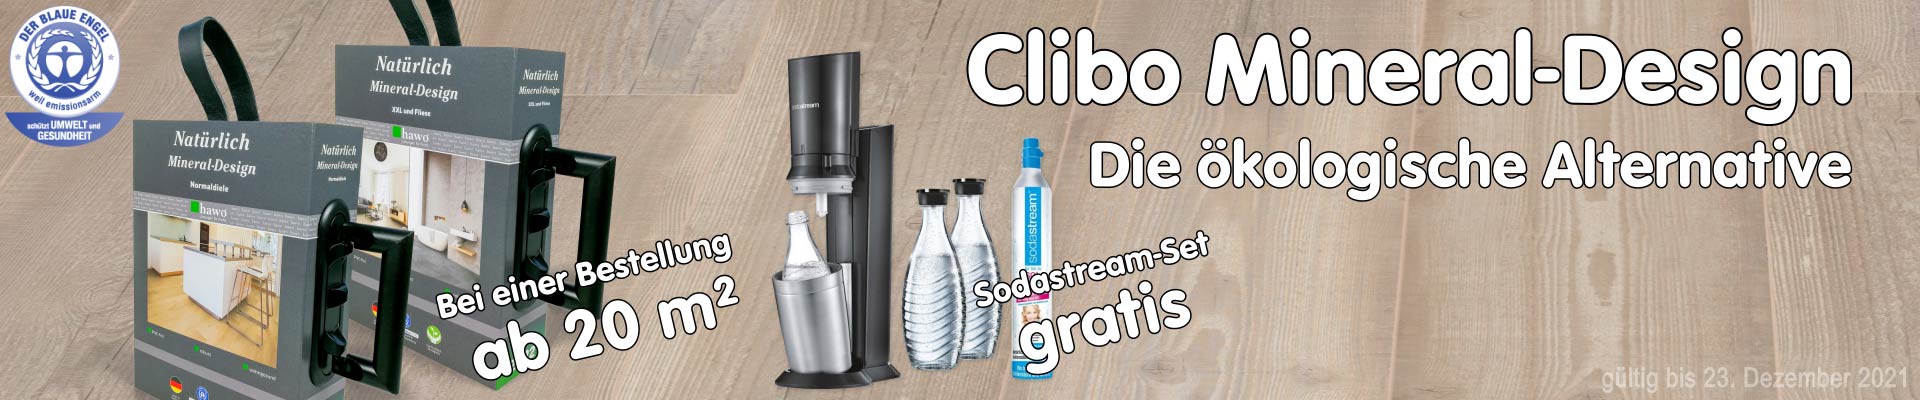 Clibo Mineral-Design – Sonderaktion